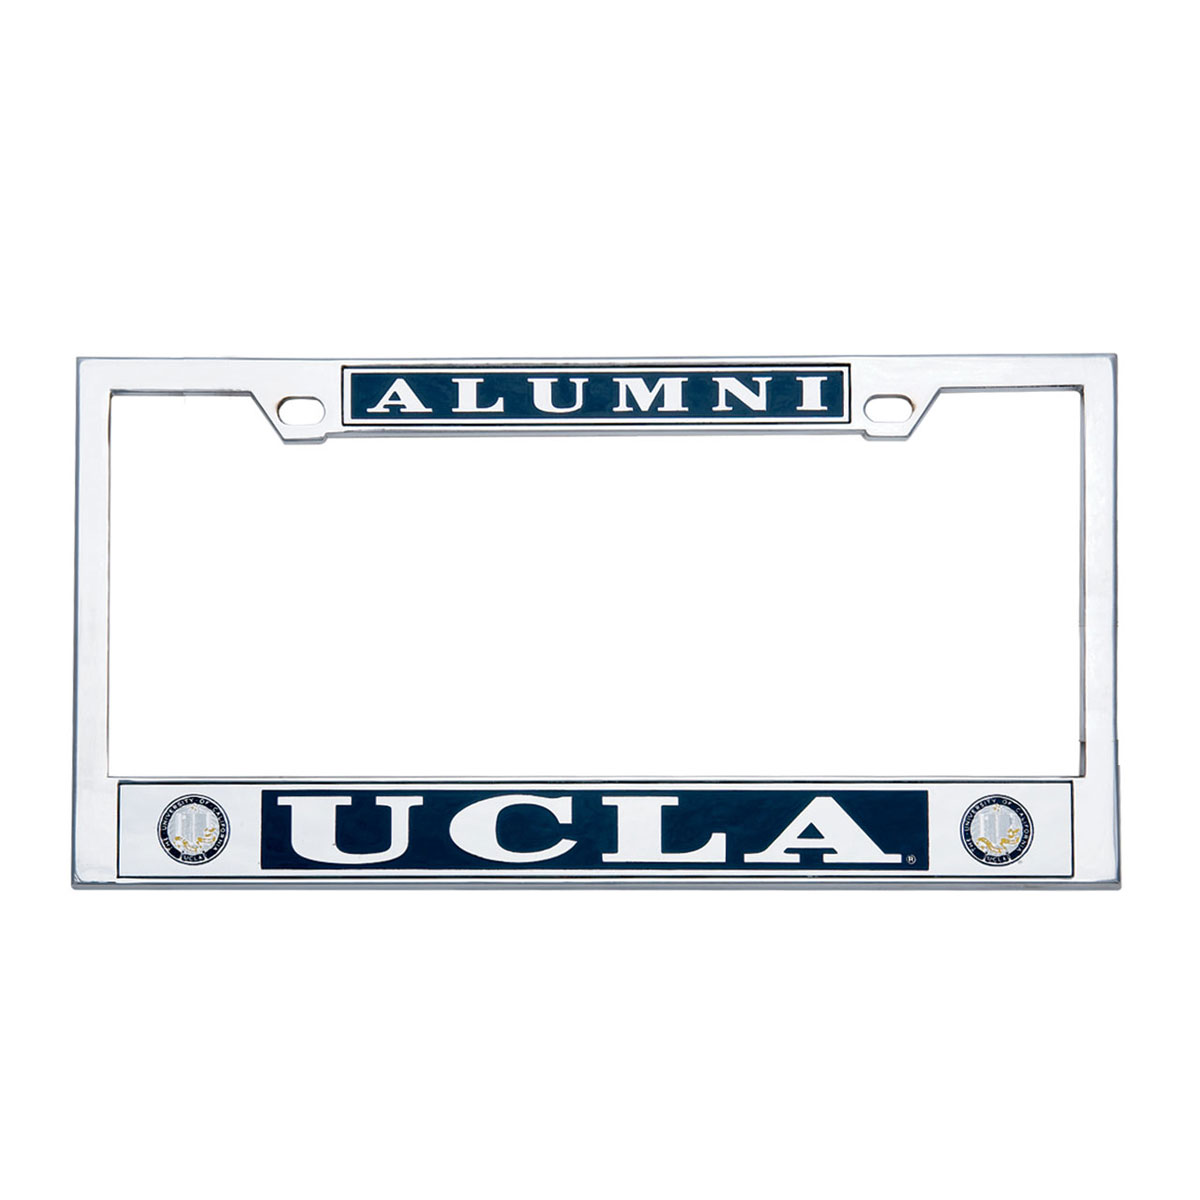 UCLA Alumni License Frame, silver